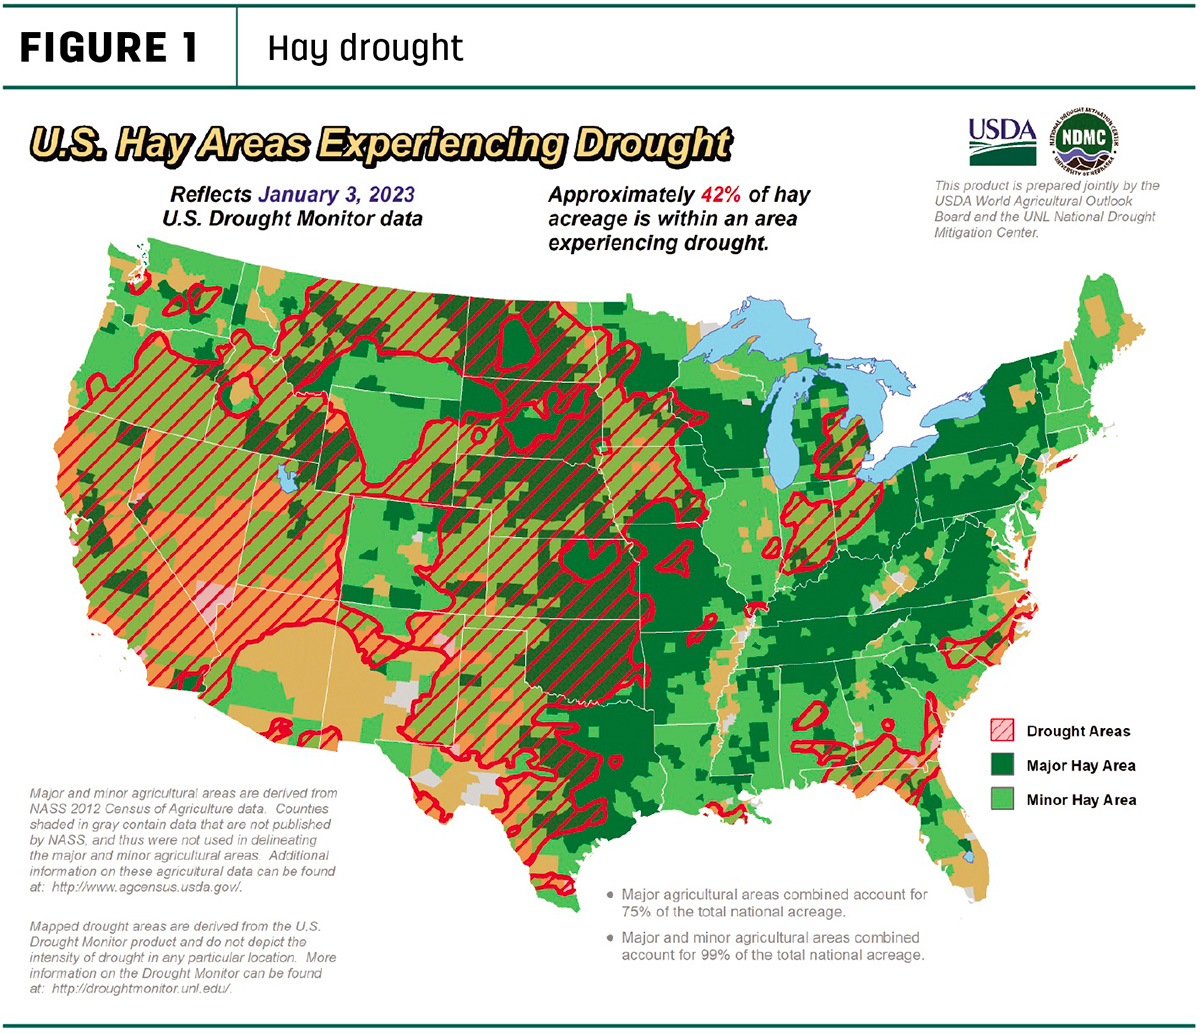 56749-natzke-hay-drought-map-fg1.jpg